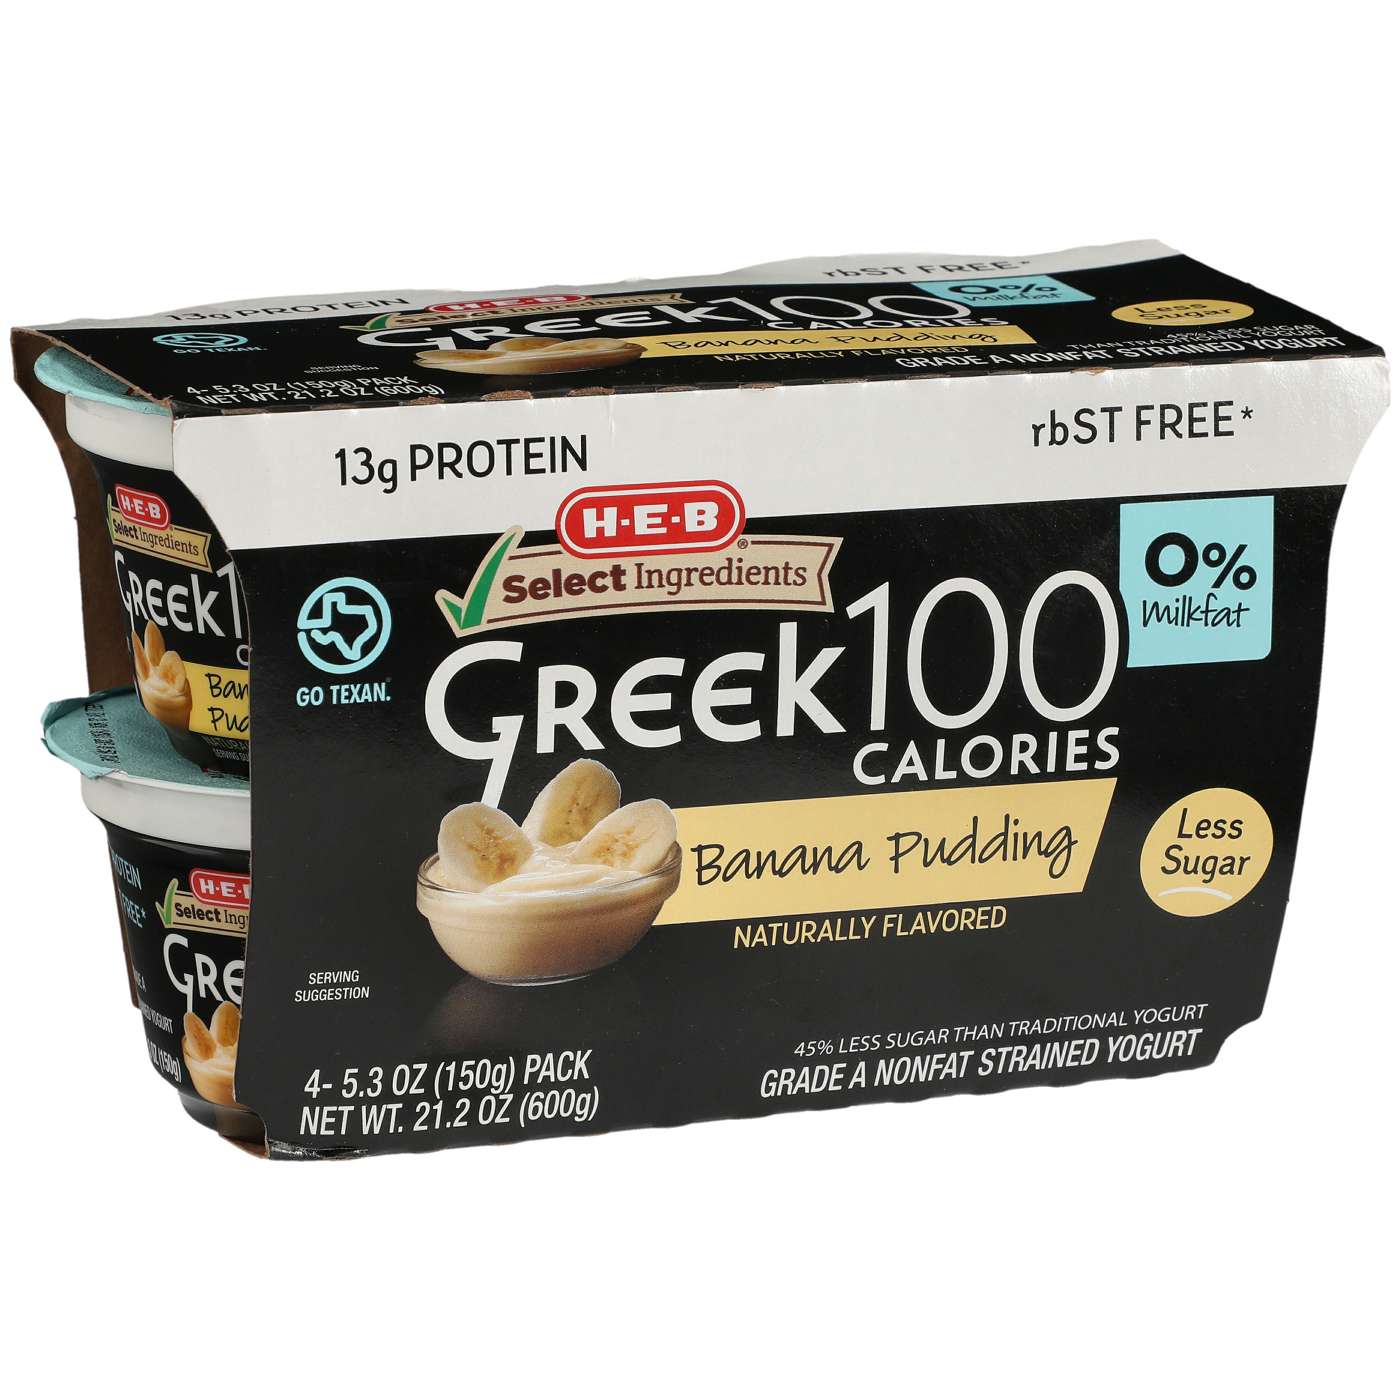 H-E-B 13g Protein Greek 100 Calories Nonfat Yogurt - Banana Pudding; image 1 of 2